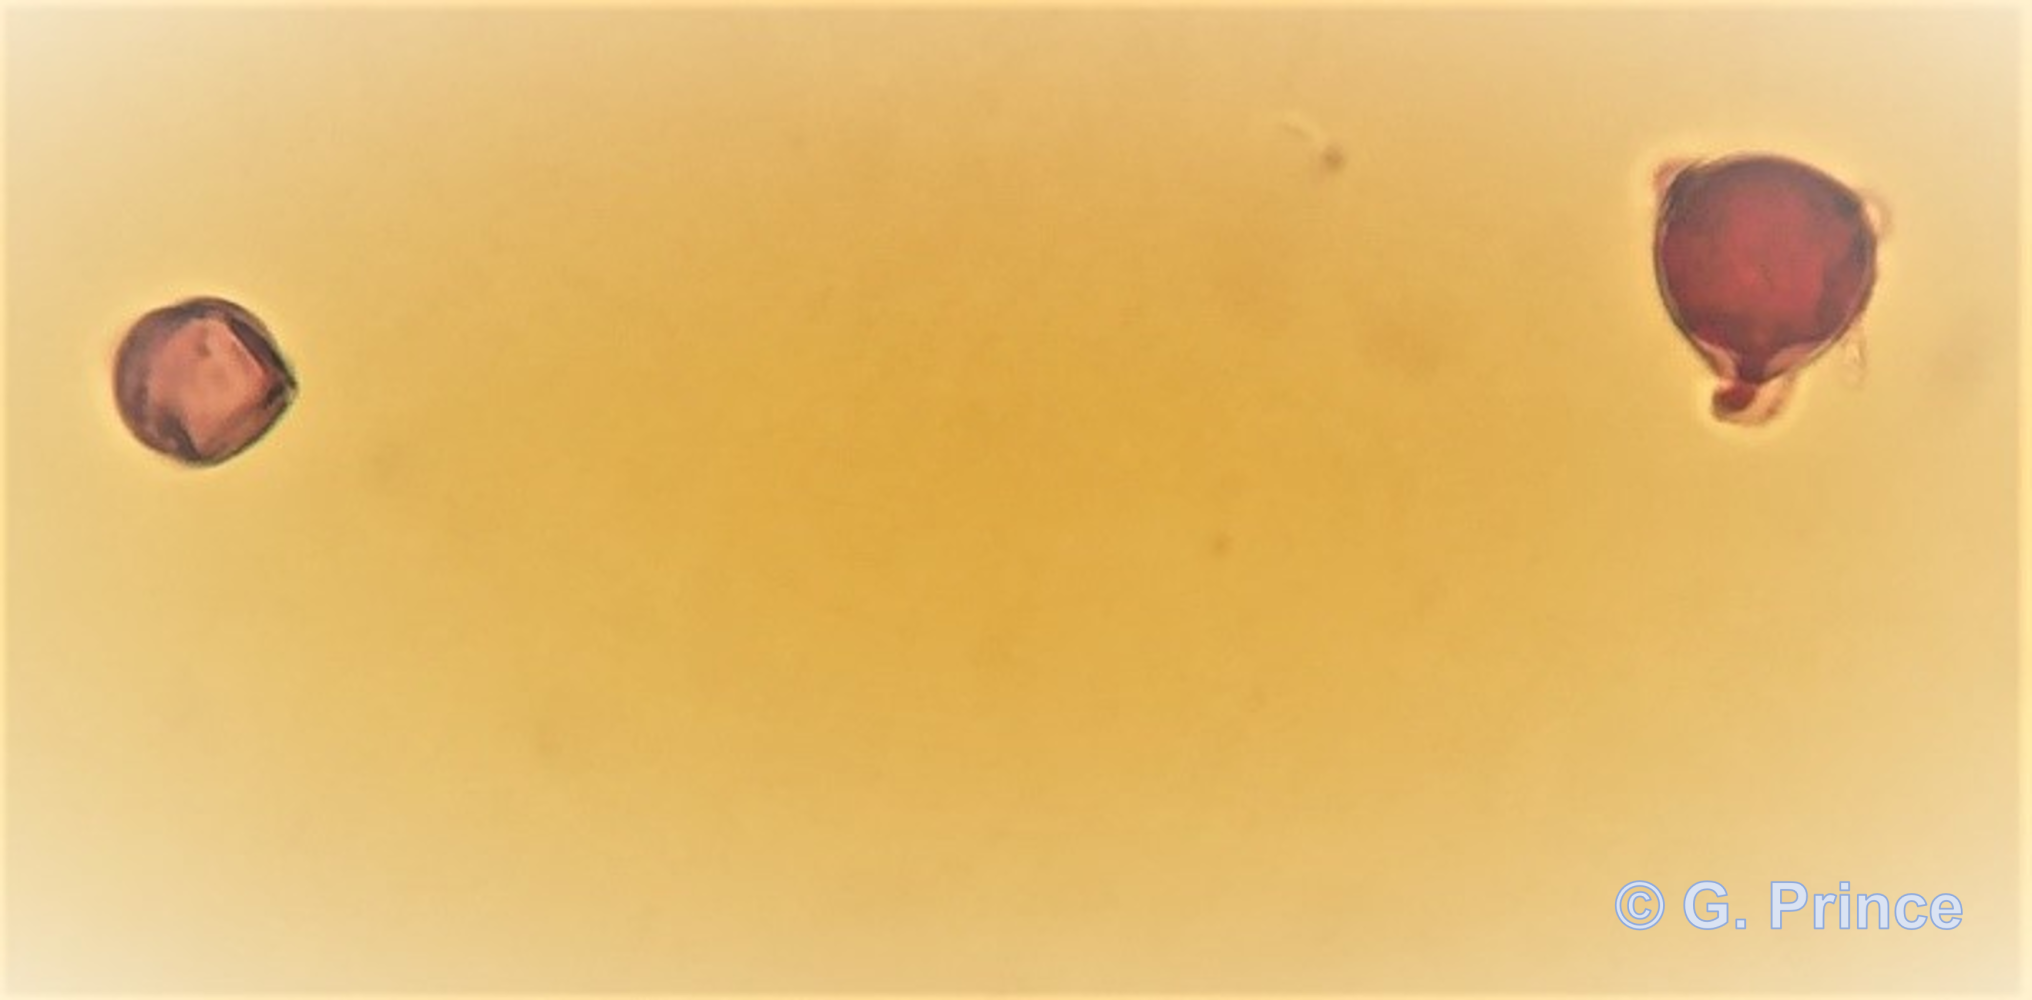 Viable pollen grain of tomato